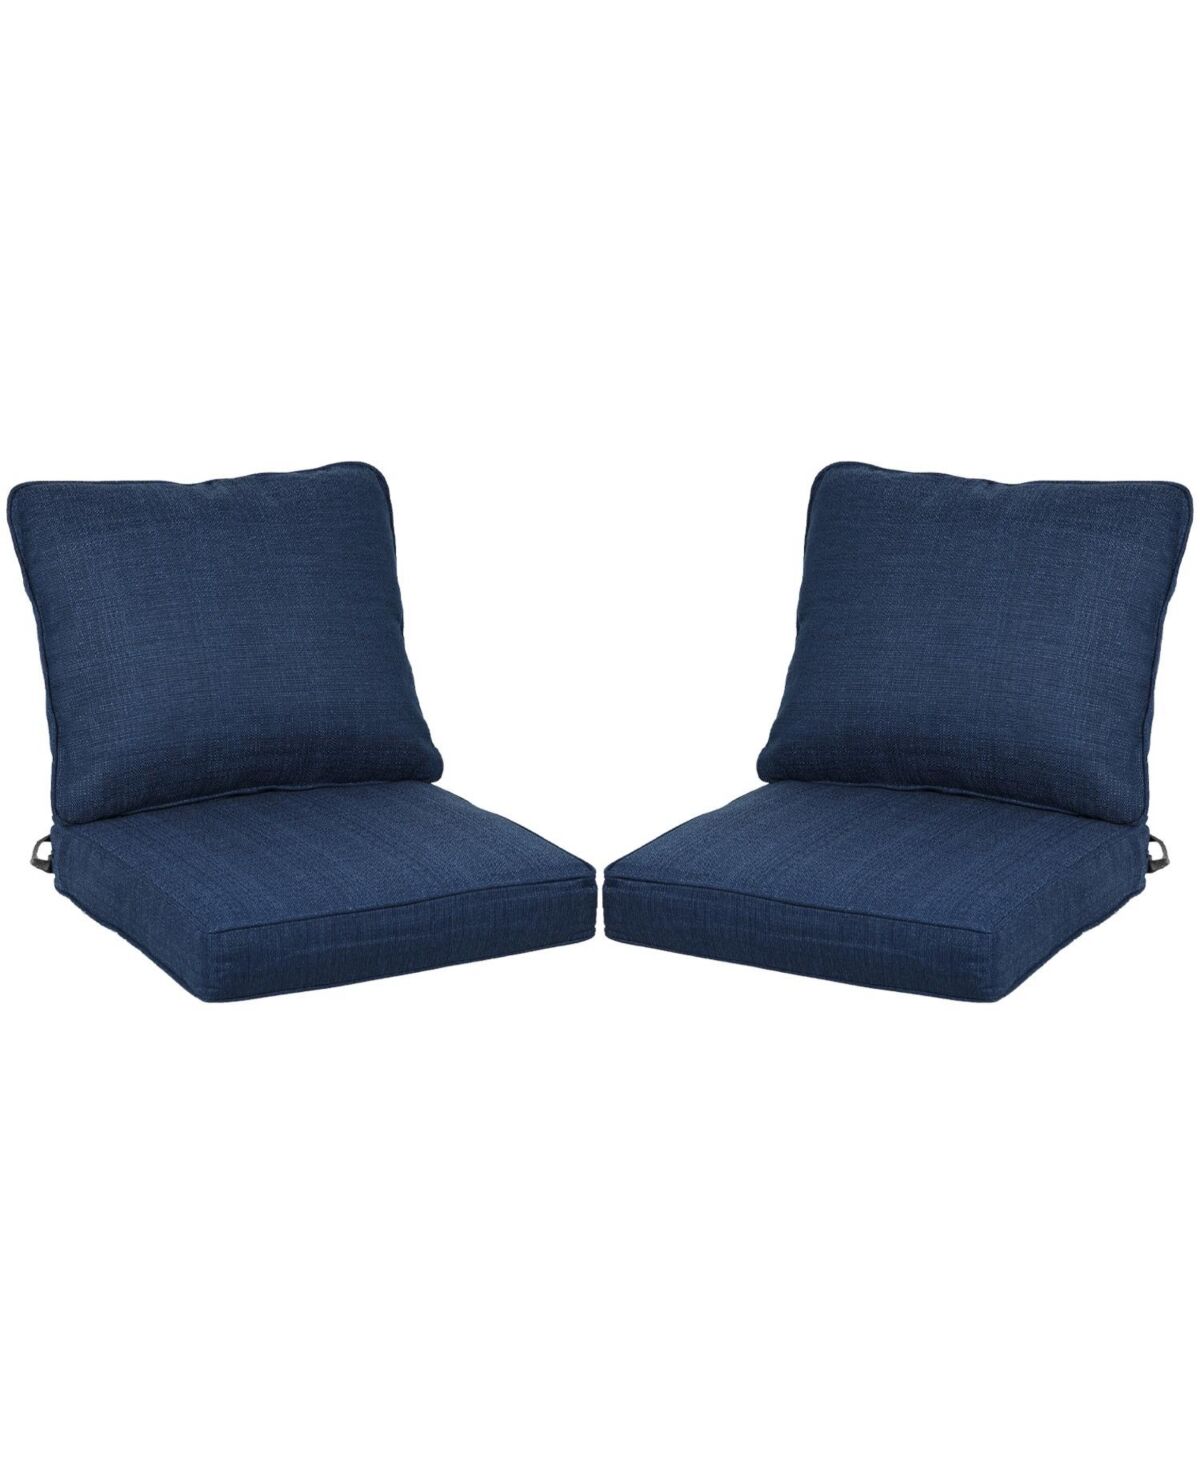 Aoodor 24.4''x23.2'' Outdoor Patio Deep Seating Cushion Set with Storage Bag Single Chair Sofa Seat/Back Cushion- Set of 2 - Dark blue